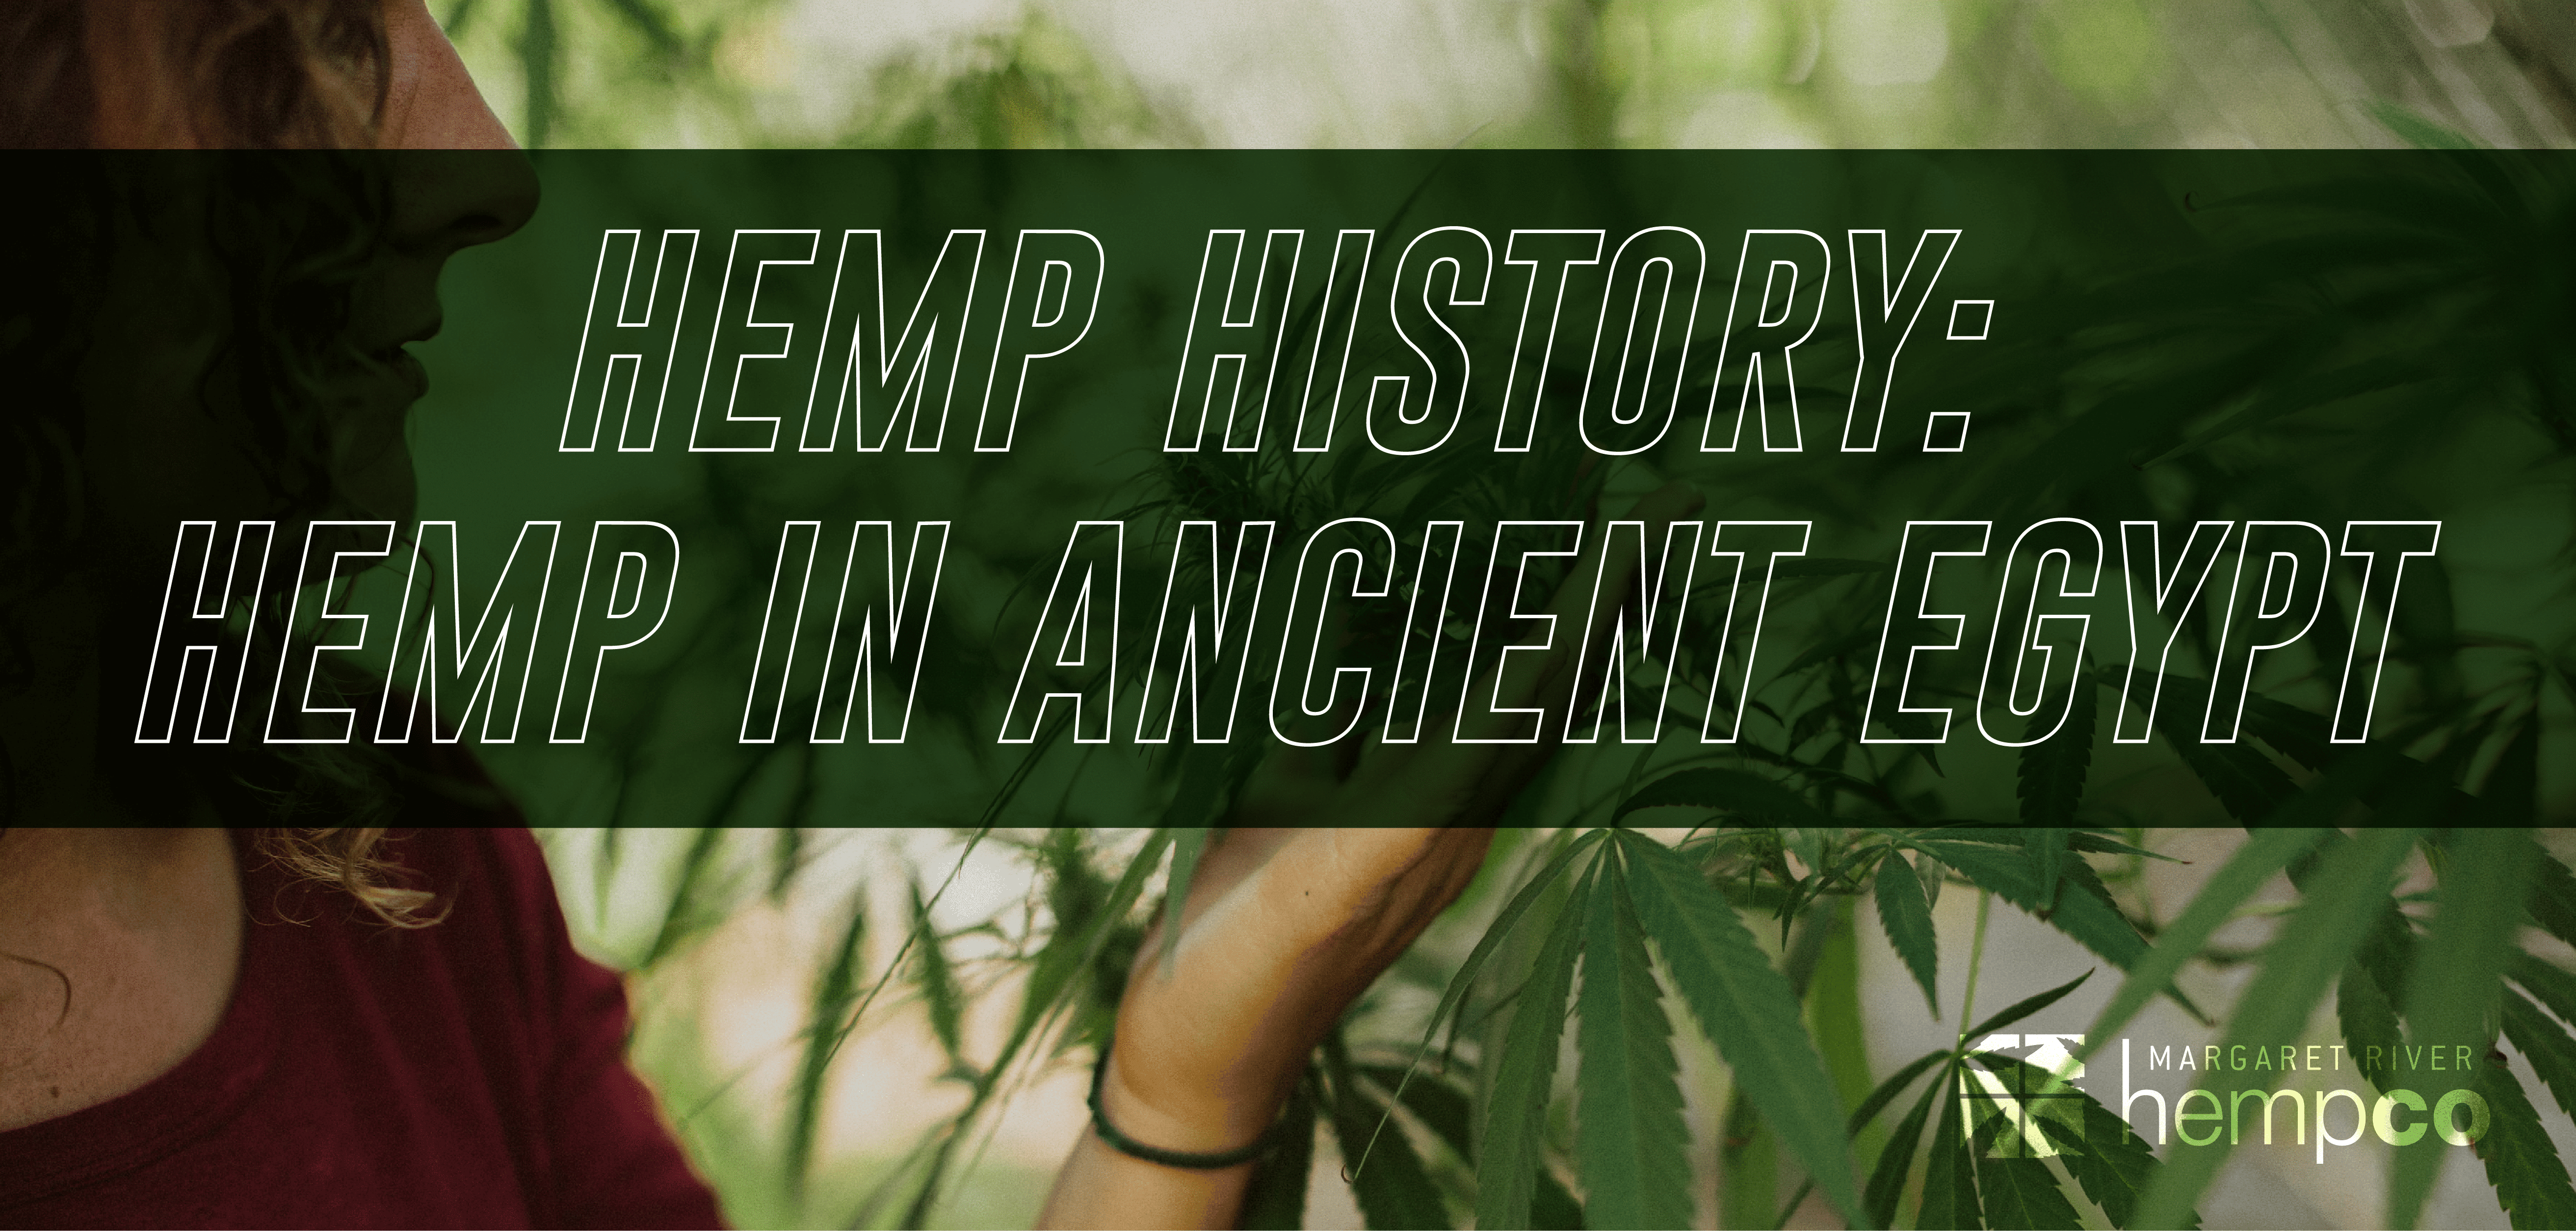 Hemp History in Ancient Egypt